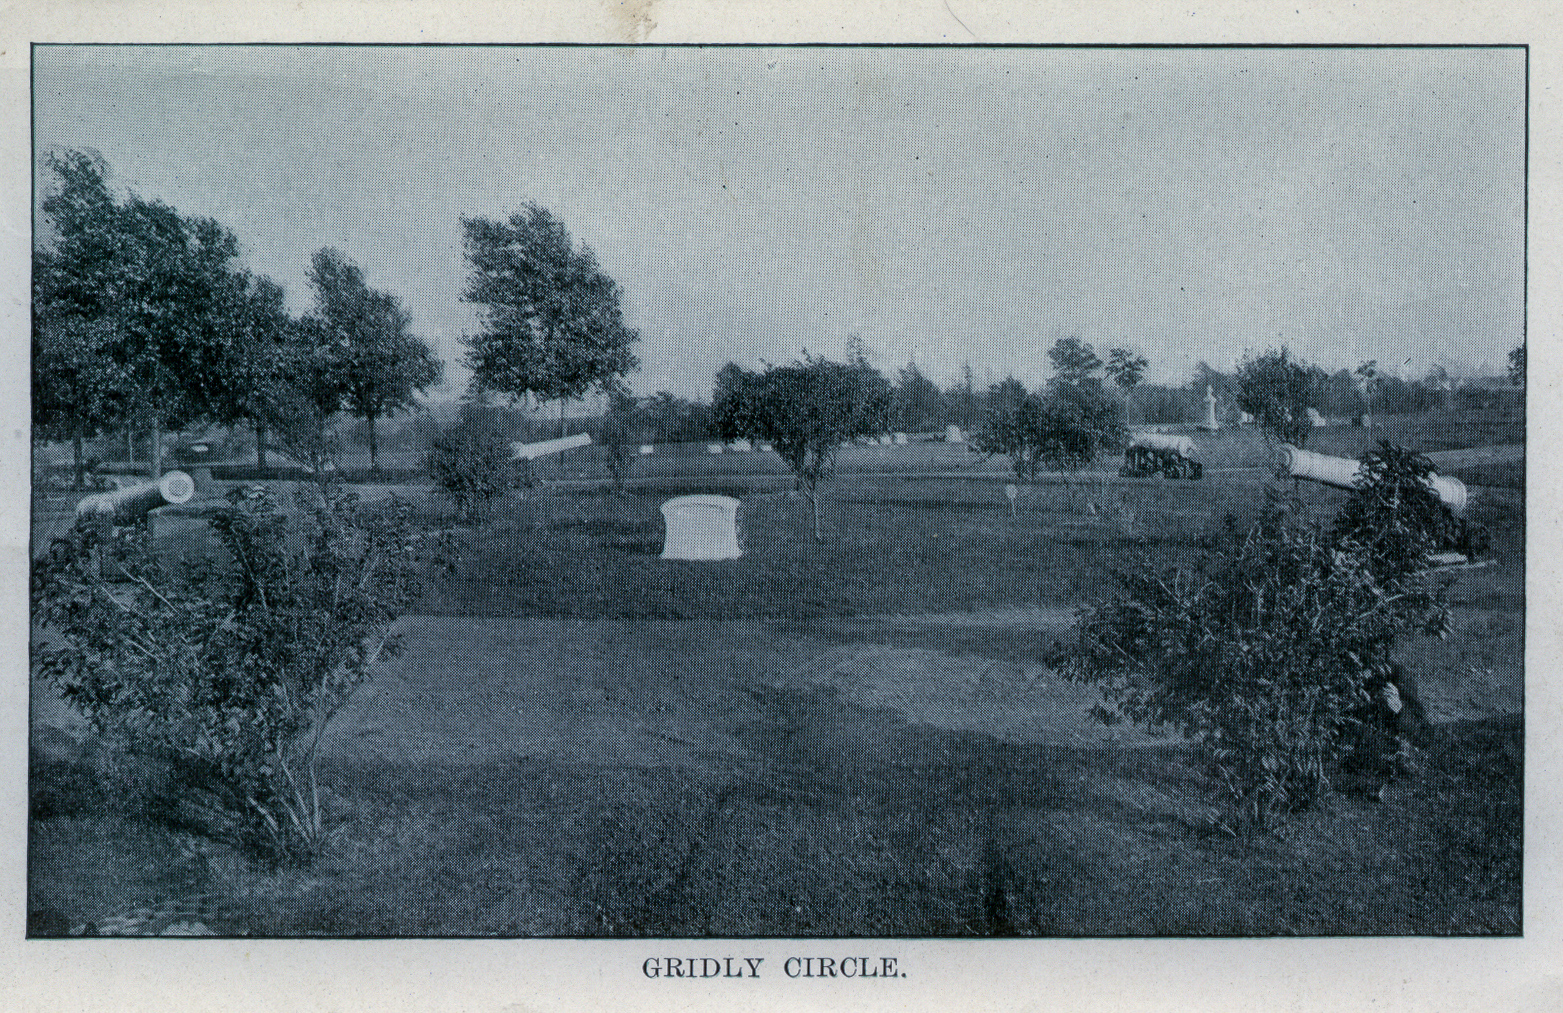 Gridley Circle